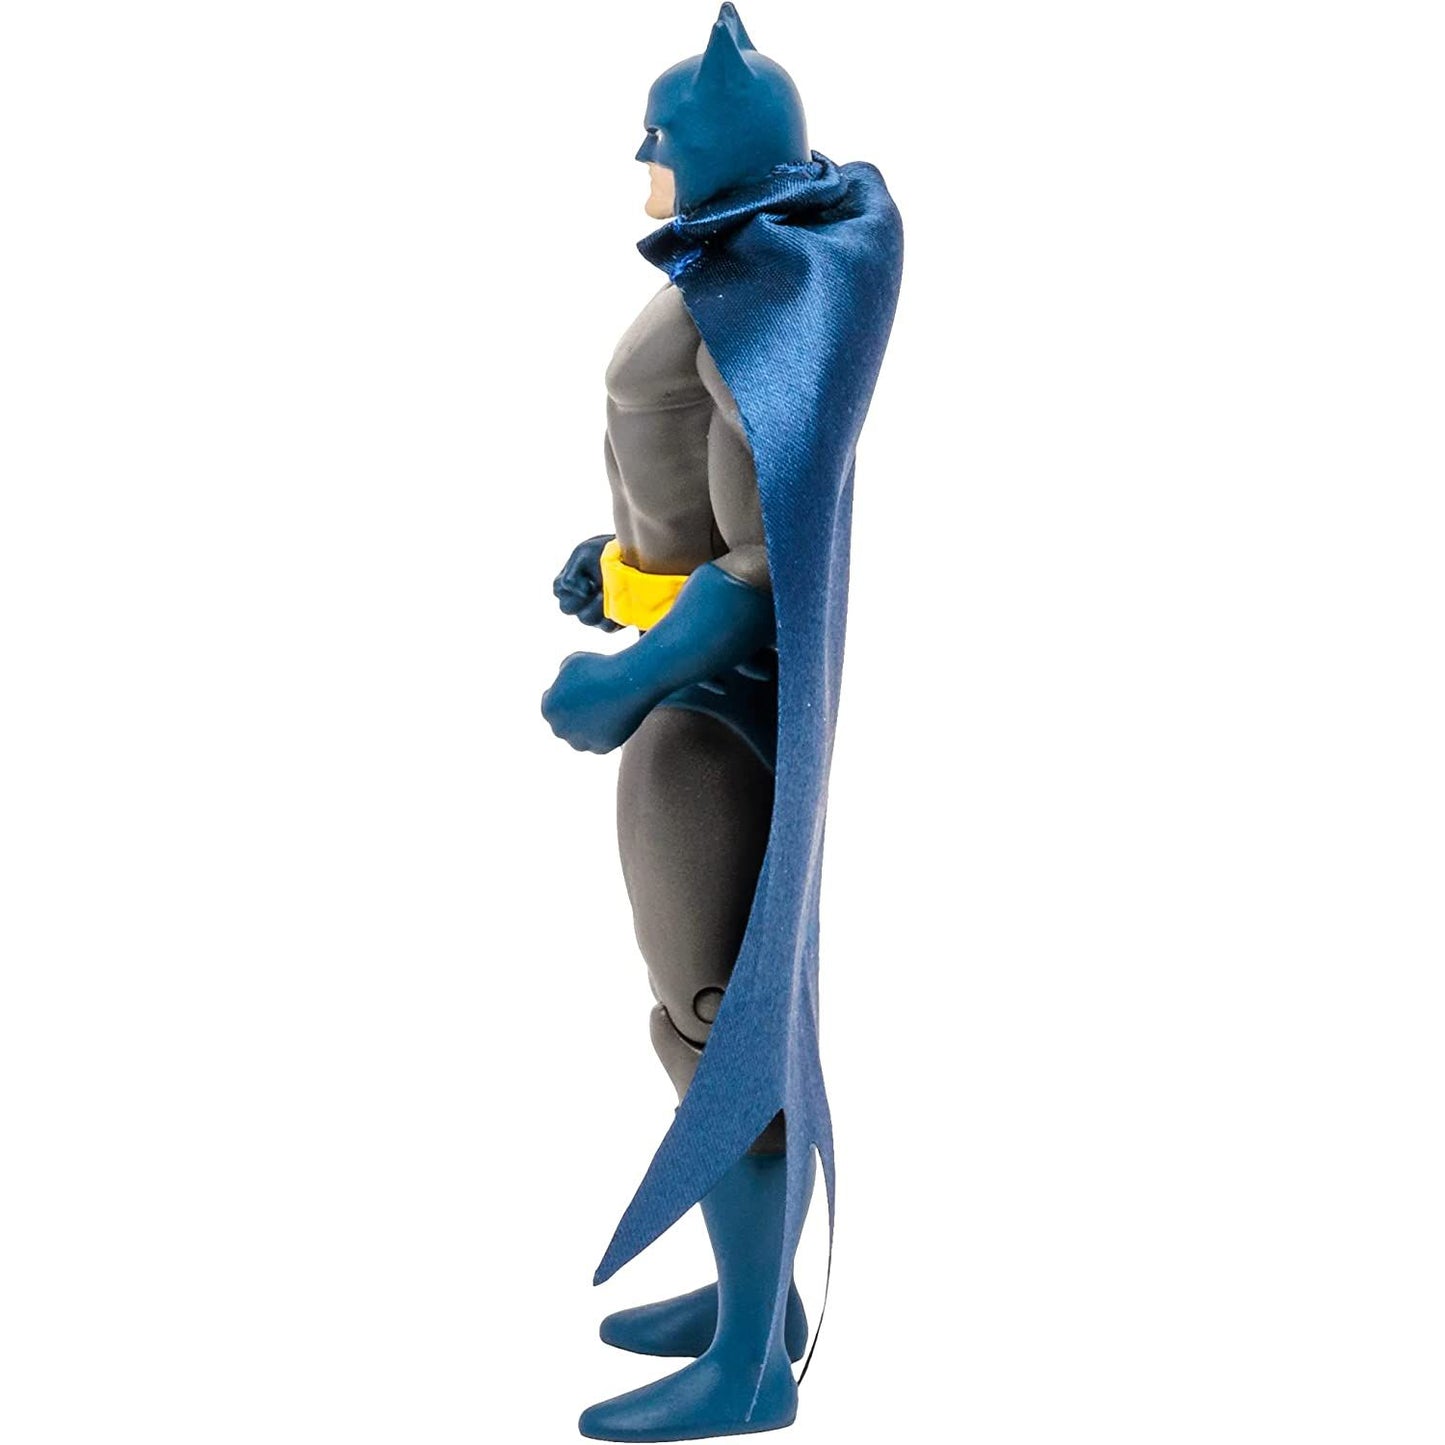 DC Direct - Super Powers - Hush Batman Figure side pose - Heretoserveyou